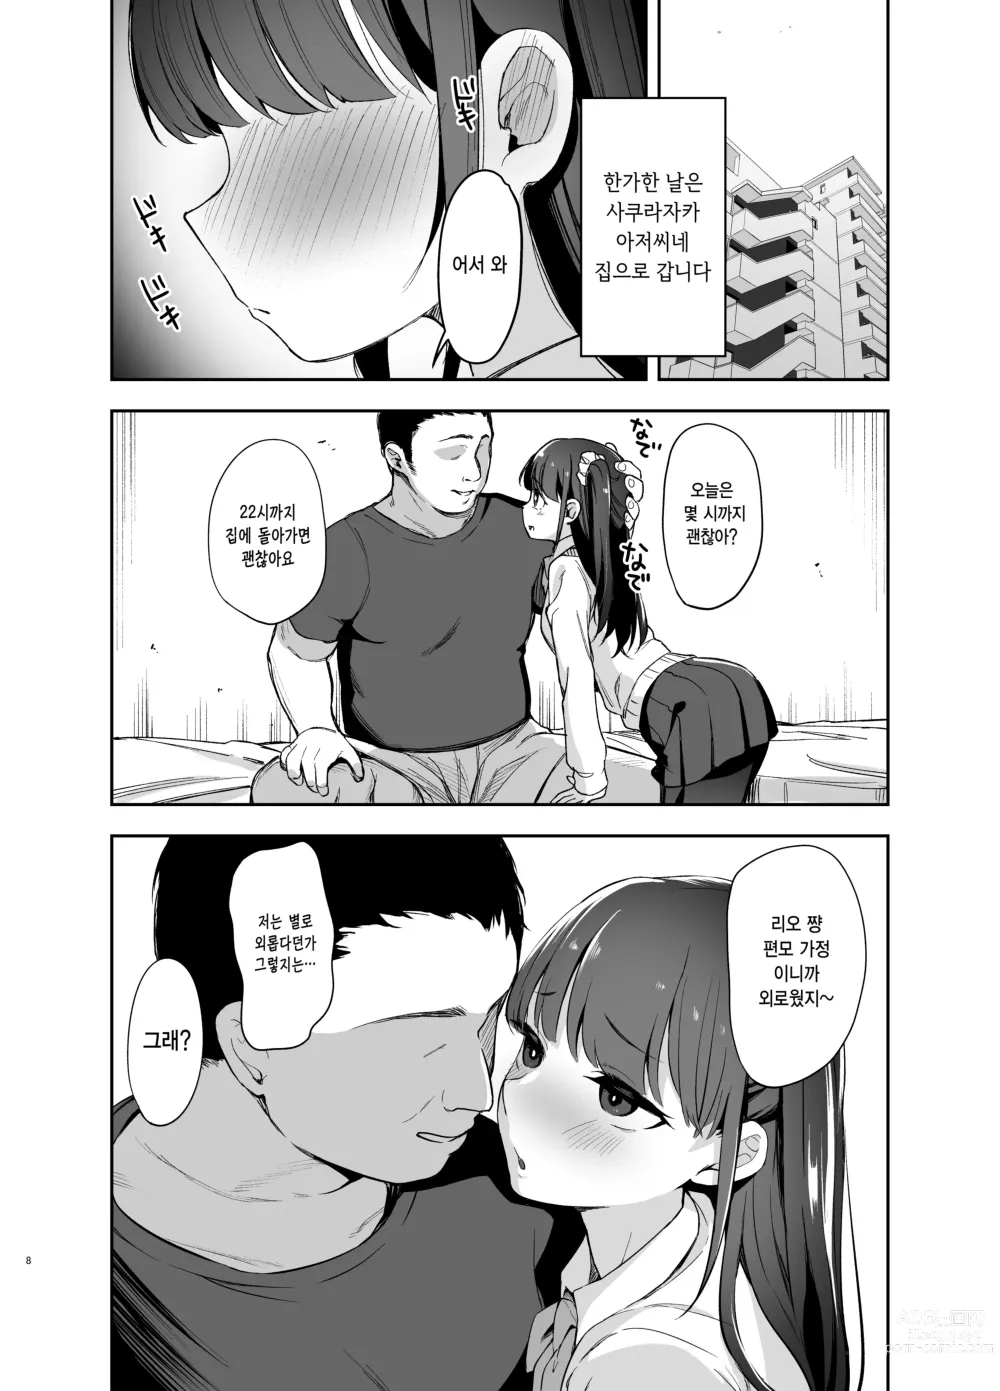 Page 6 of doujinshi 최면에 걸렸다는 건 결혼하고 싶다는 뜻이지?